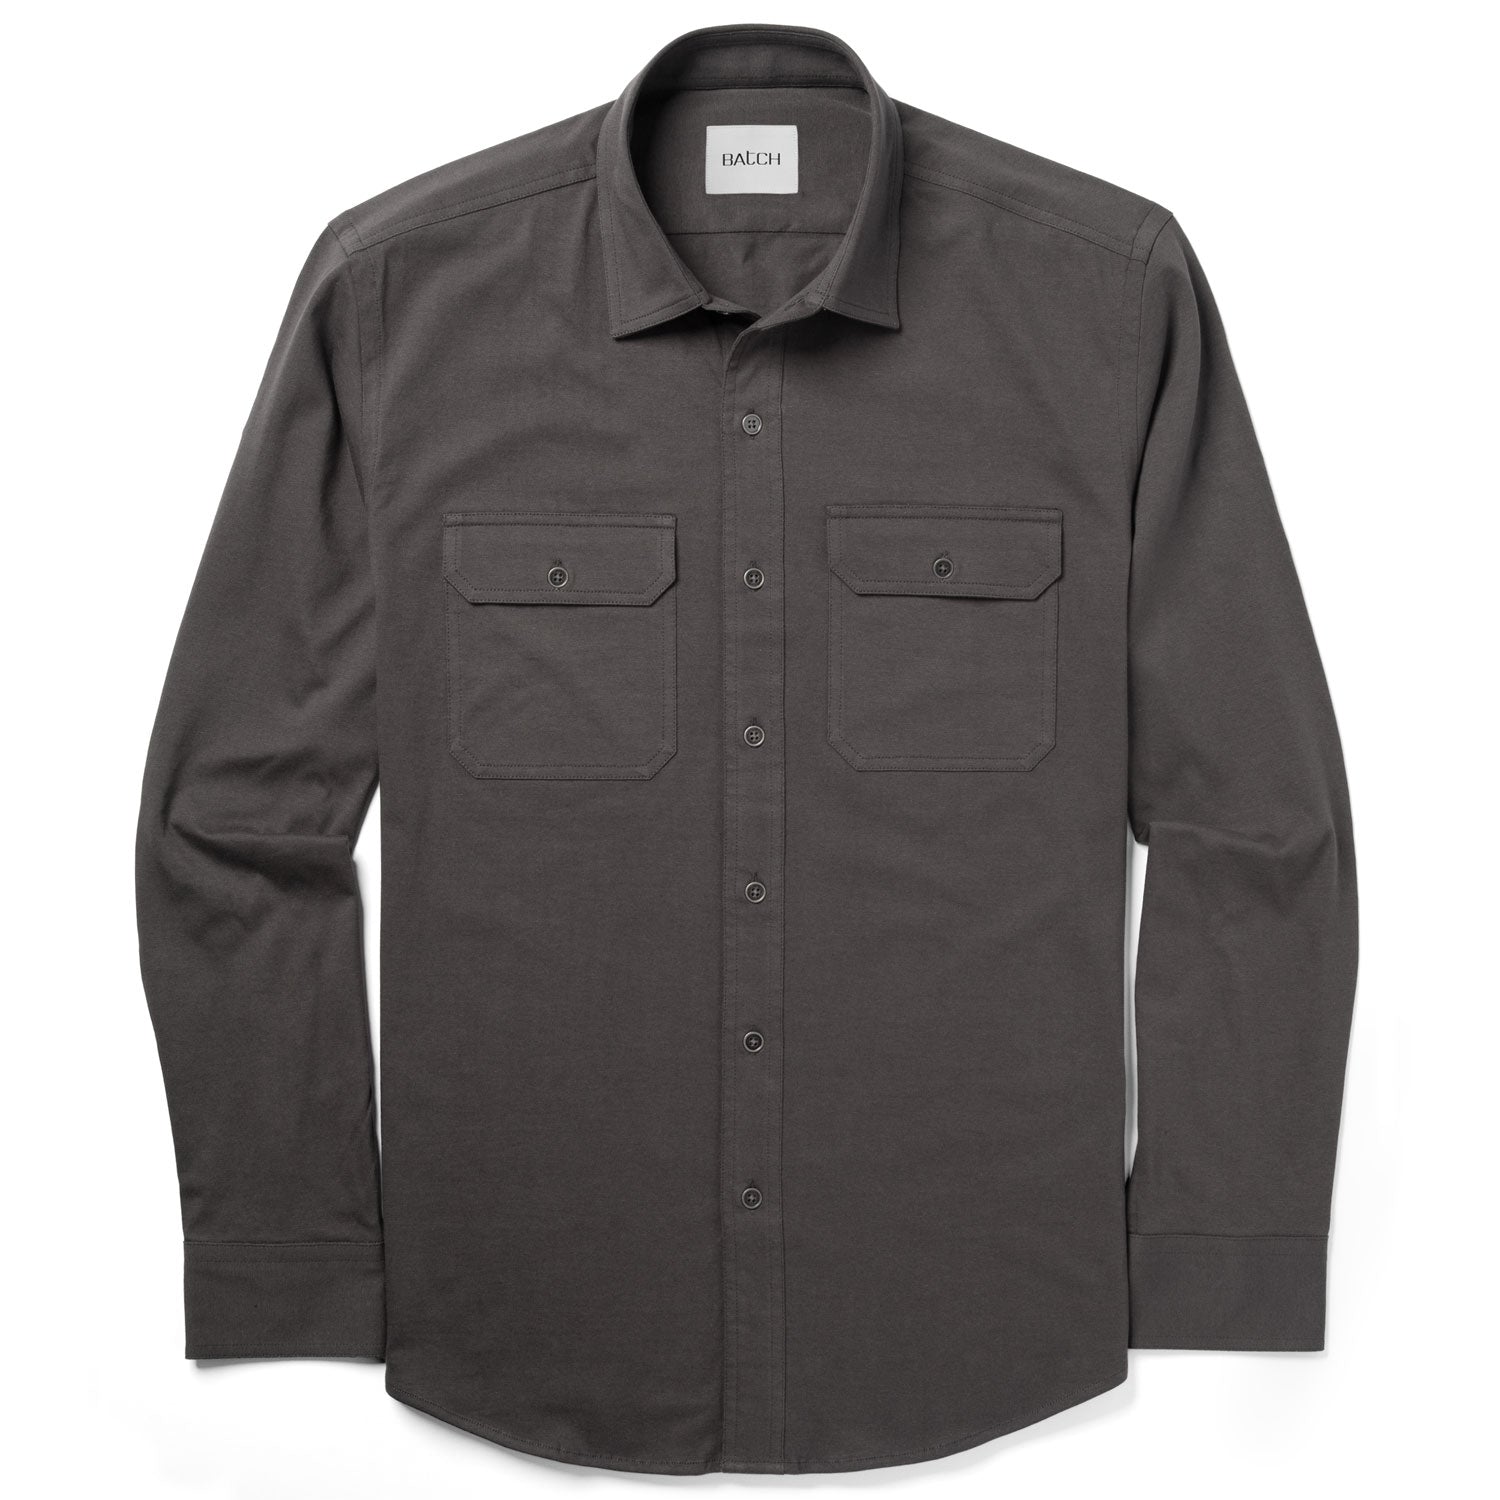 Constructor Knit Utility Shirt – Slate Gray Cotton Jersey